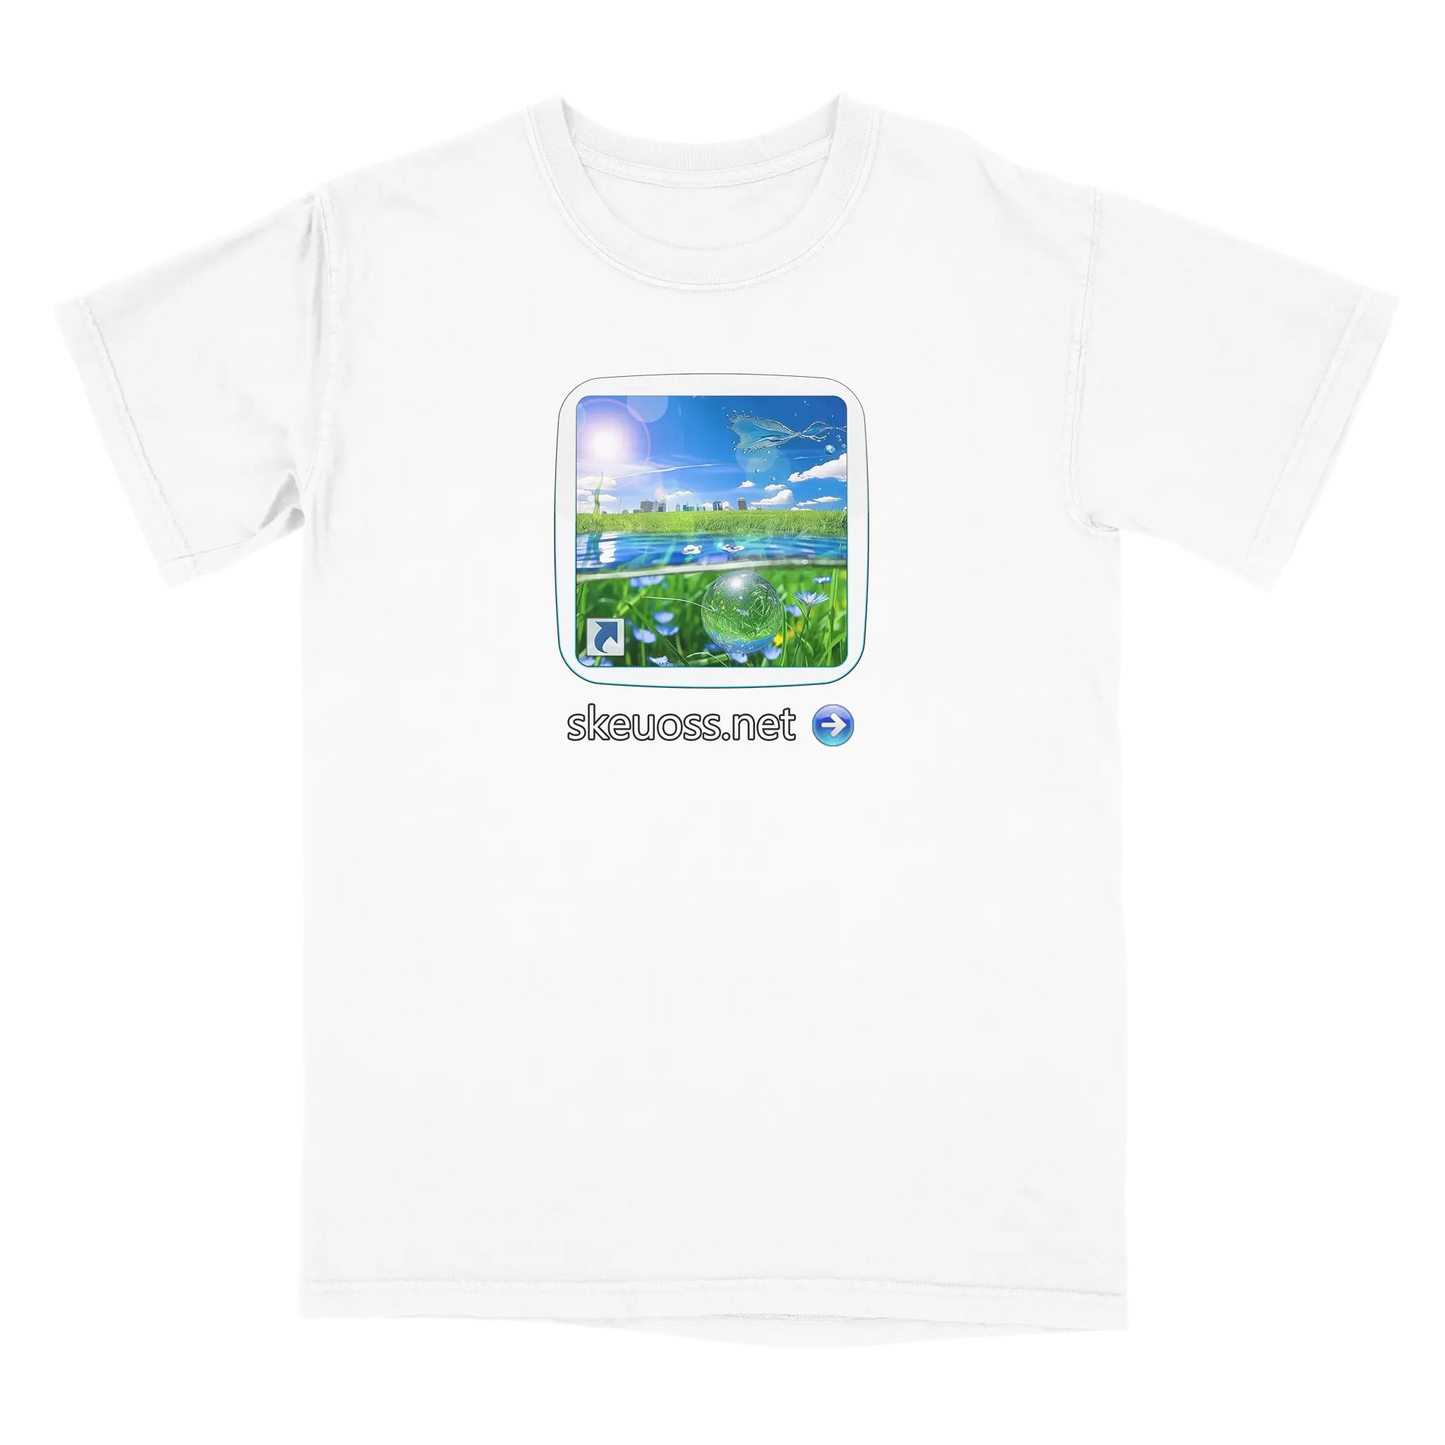 Frutiger Aero T-shirt - User Login Collection - User 217